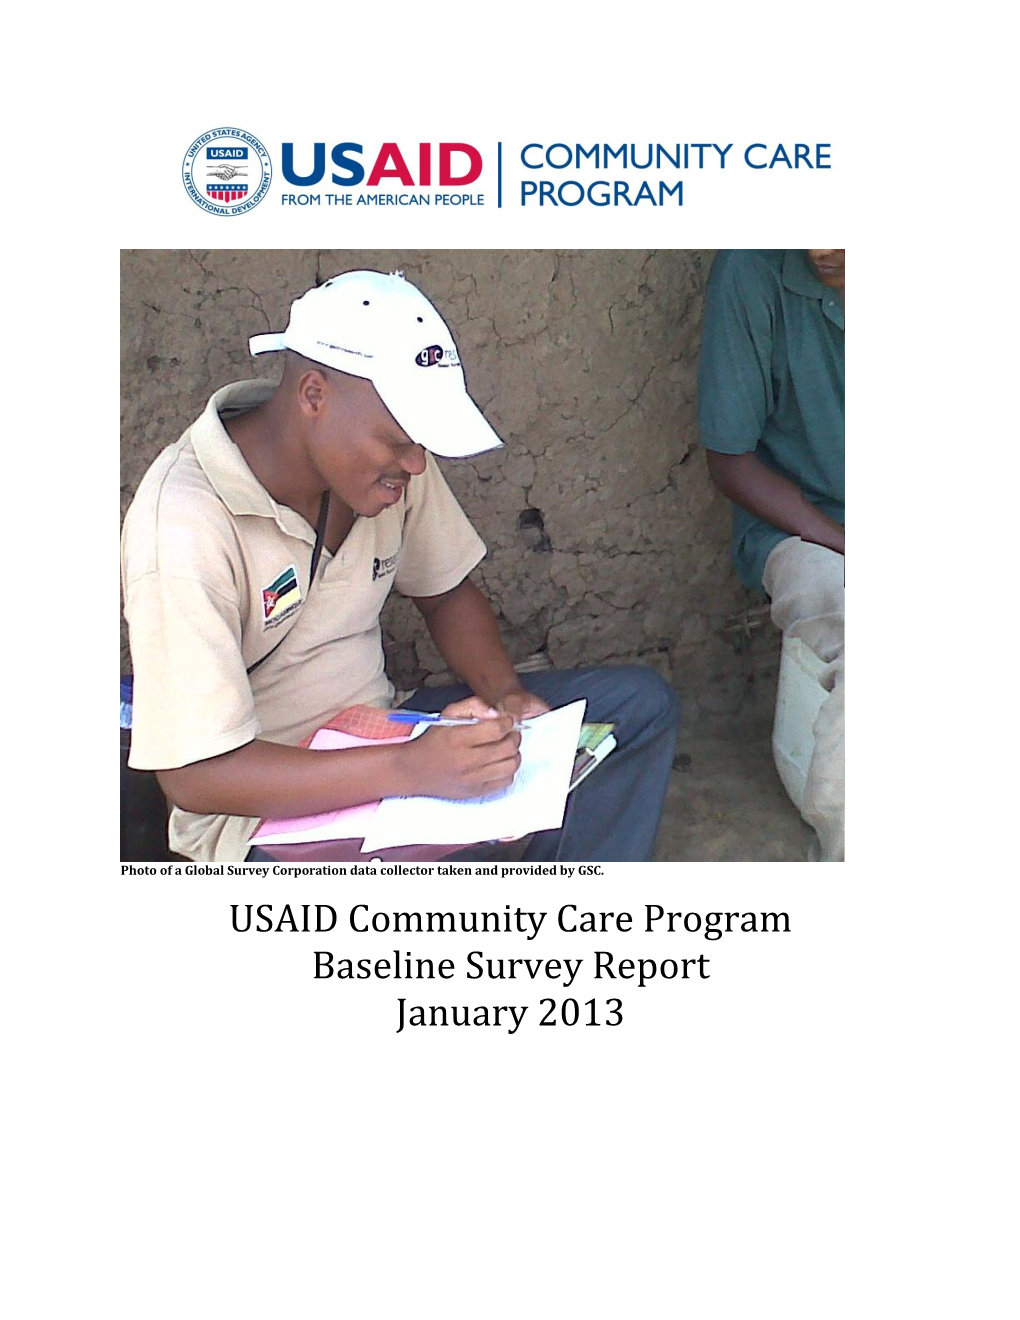 USAID Community Care Program Baseline Survey Report January 2013